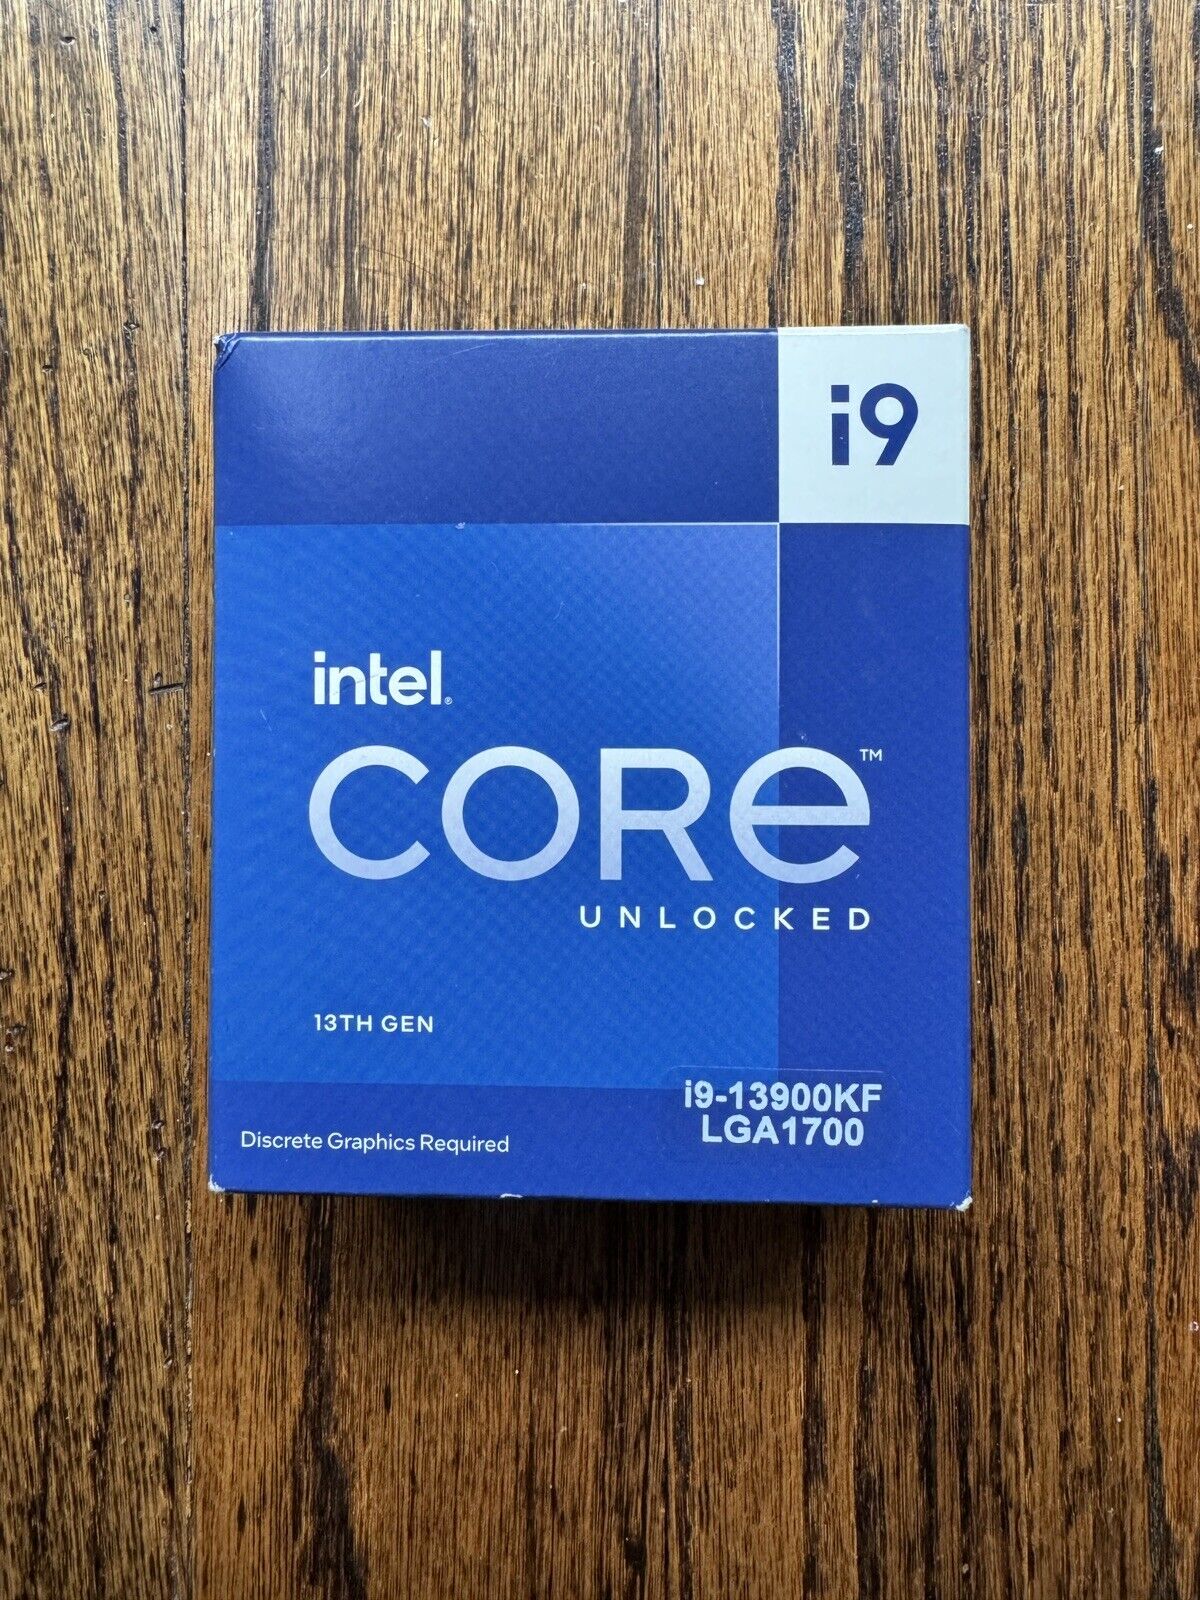 Intel Core i9-13900KF Processor (5.8 GHz, 24 Cores, LGA 1700) Box -...New Sealed